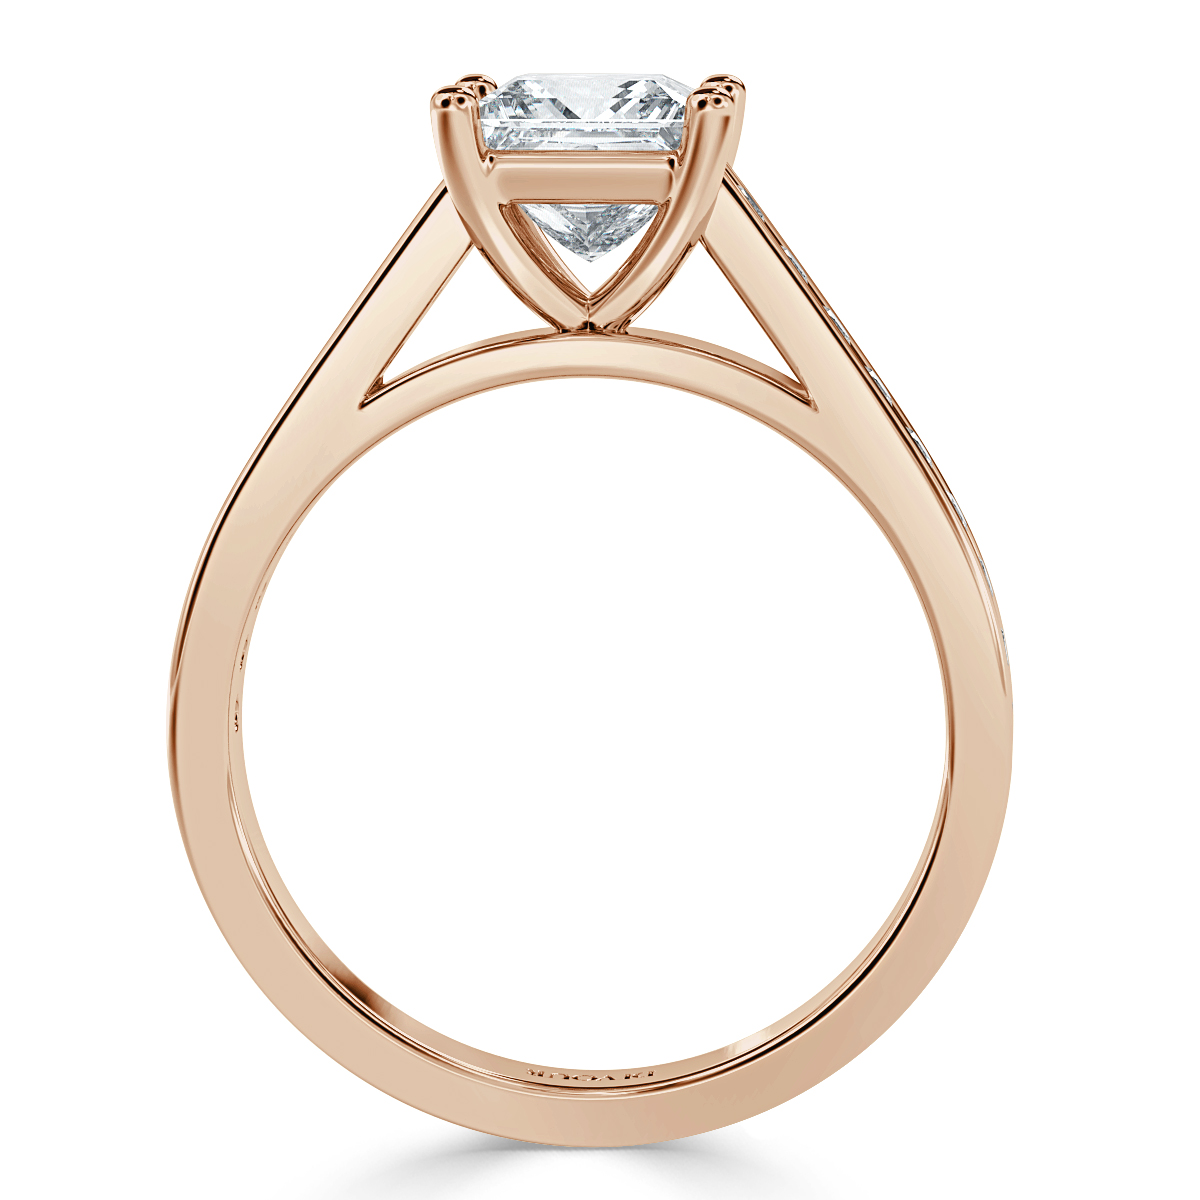 Channel set Princess Diamond Engagement Ring